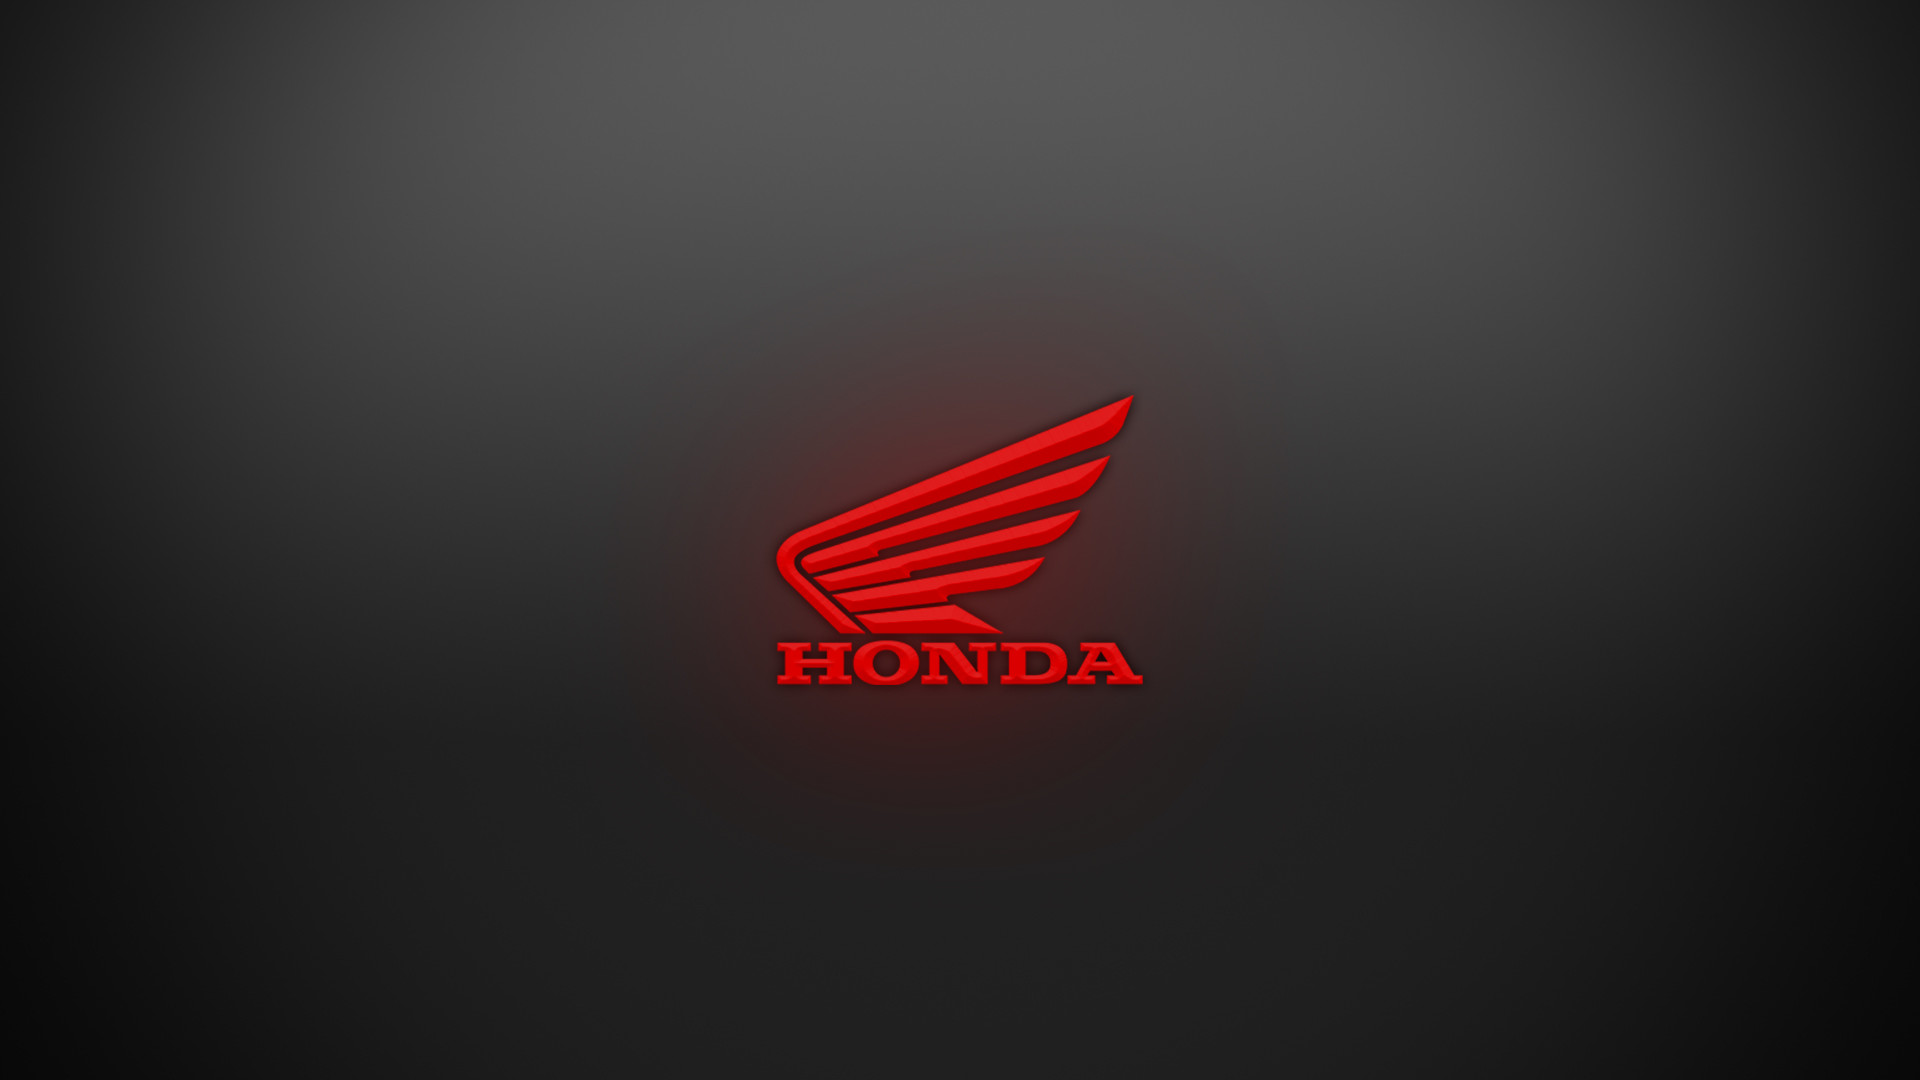 Honda logo wallpaper pictures